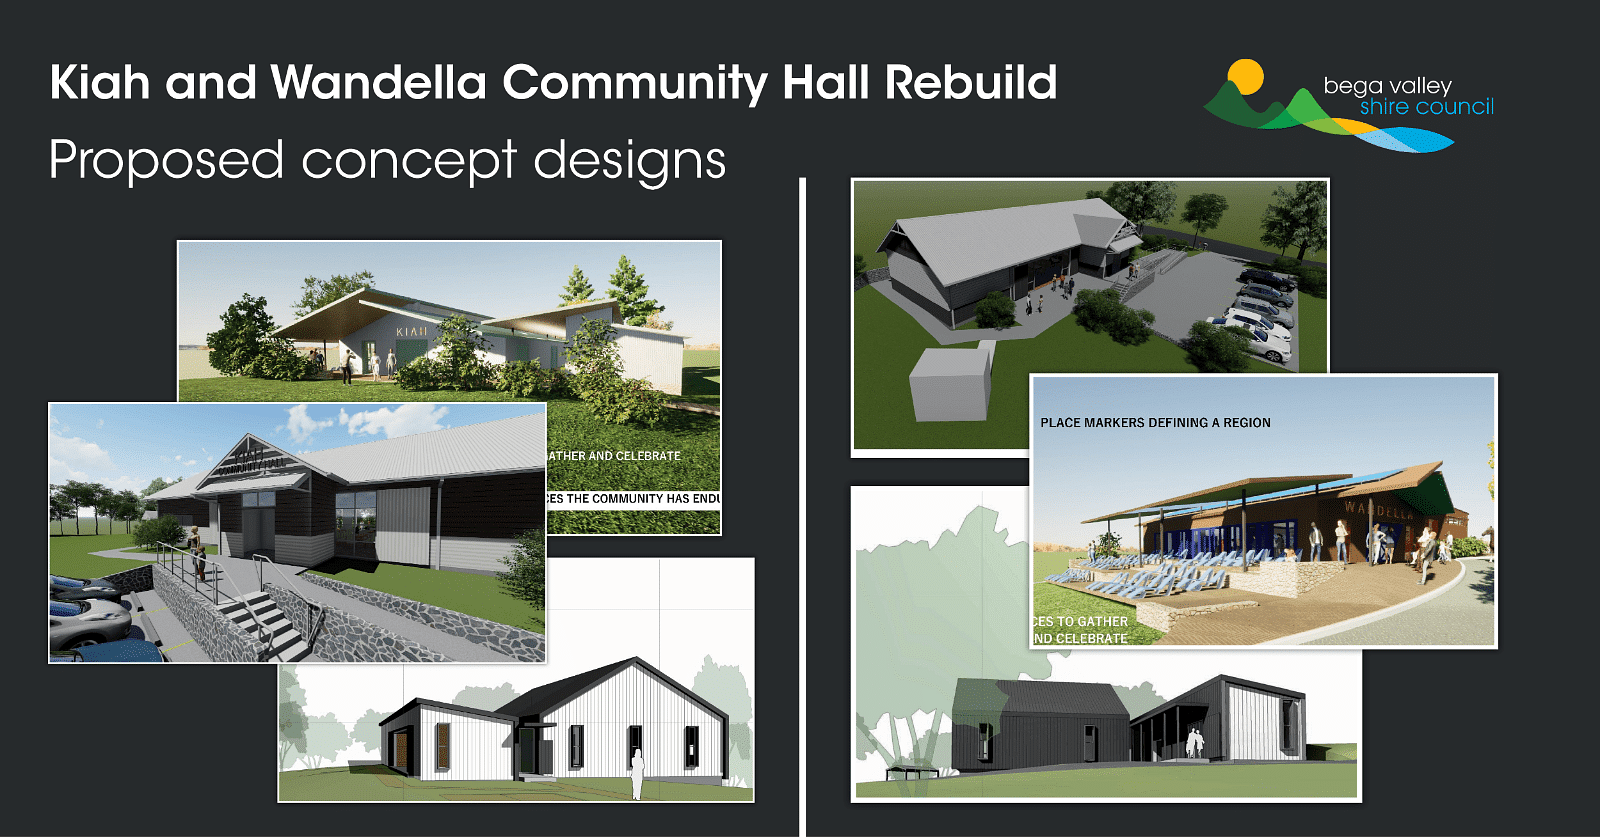 Kiah and Wandella Community Hall proposed concept designs.